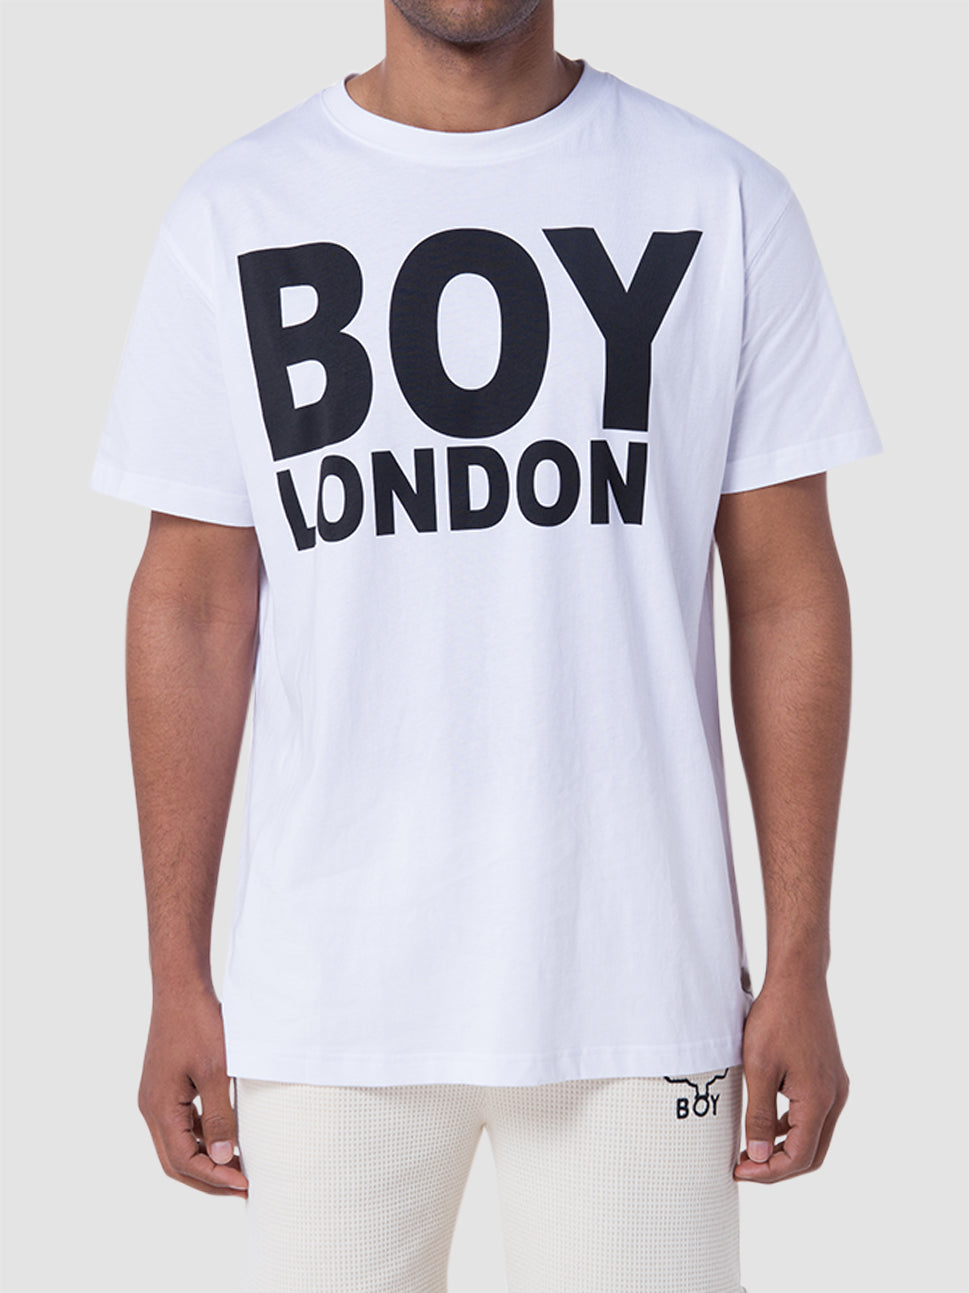 Boy London Tee WhiteBlack 1015021